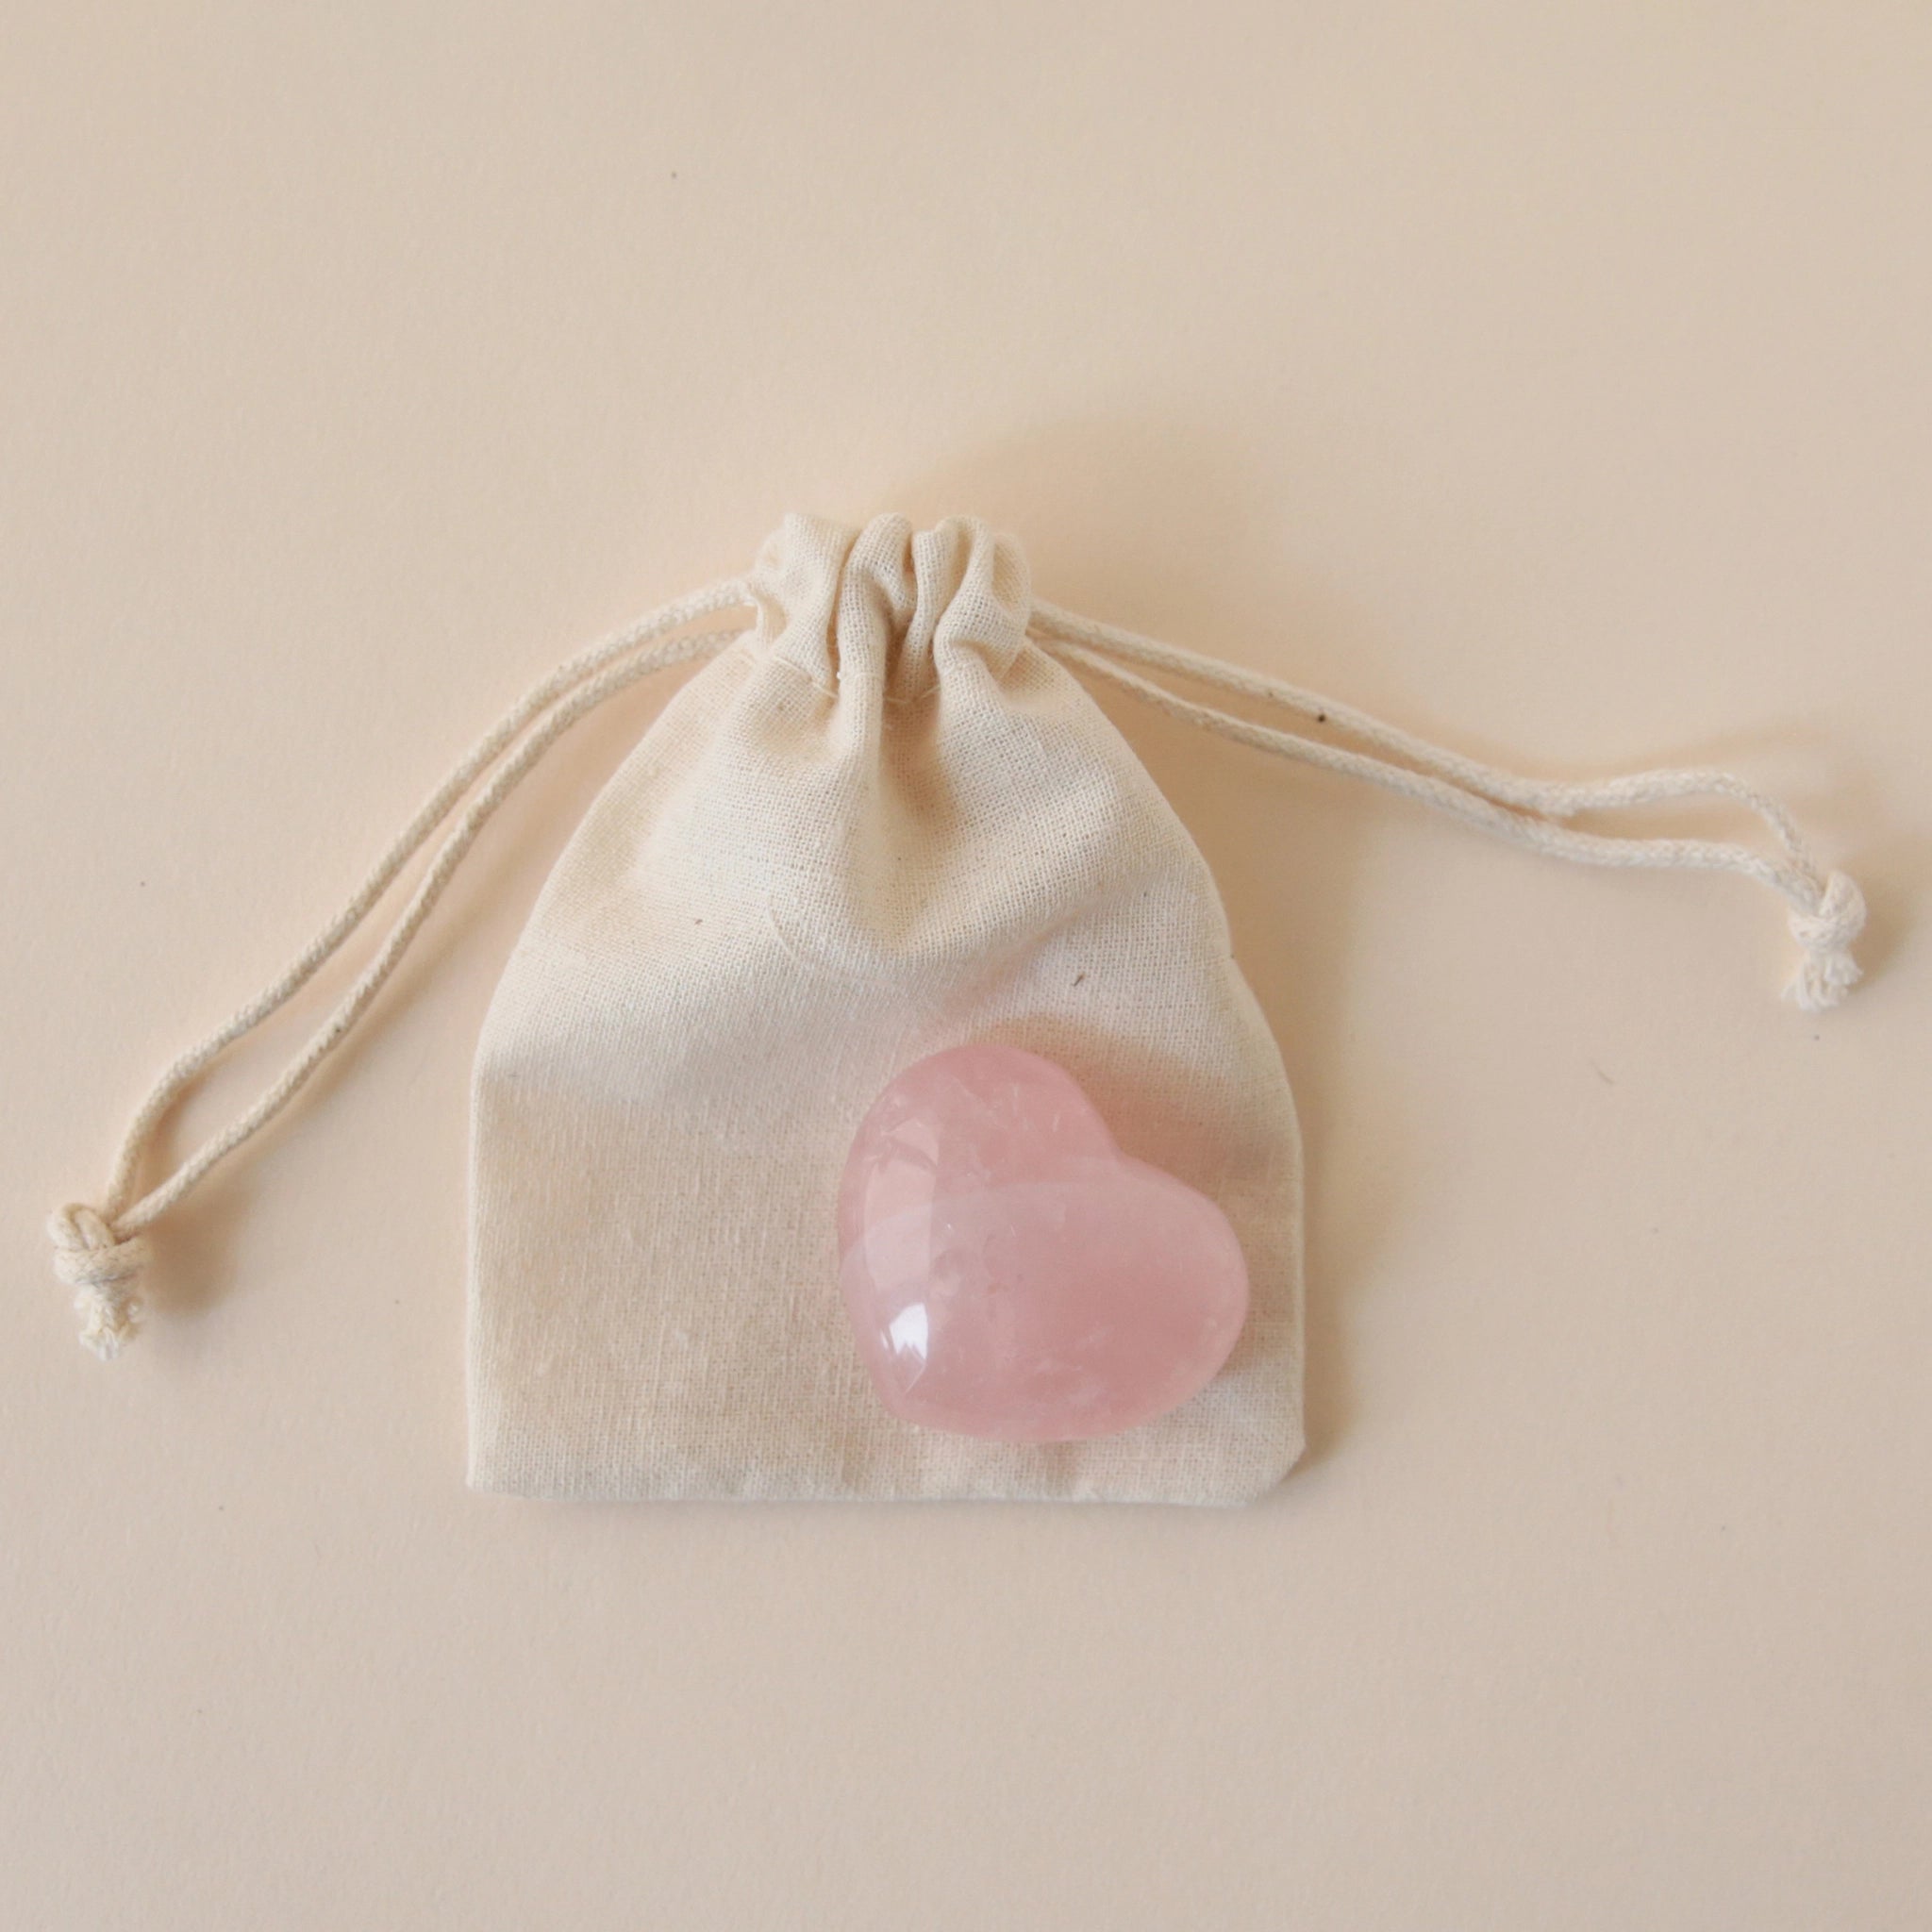 A tan muslin bag with a rose quartz stone int he shape of a heart.